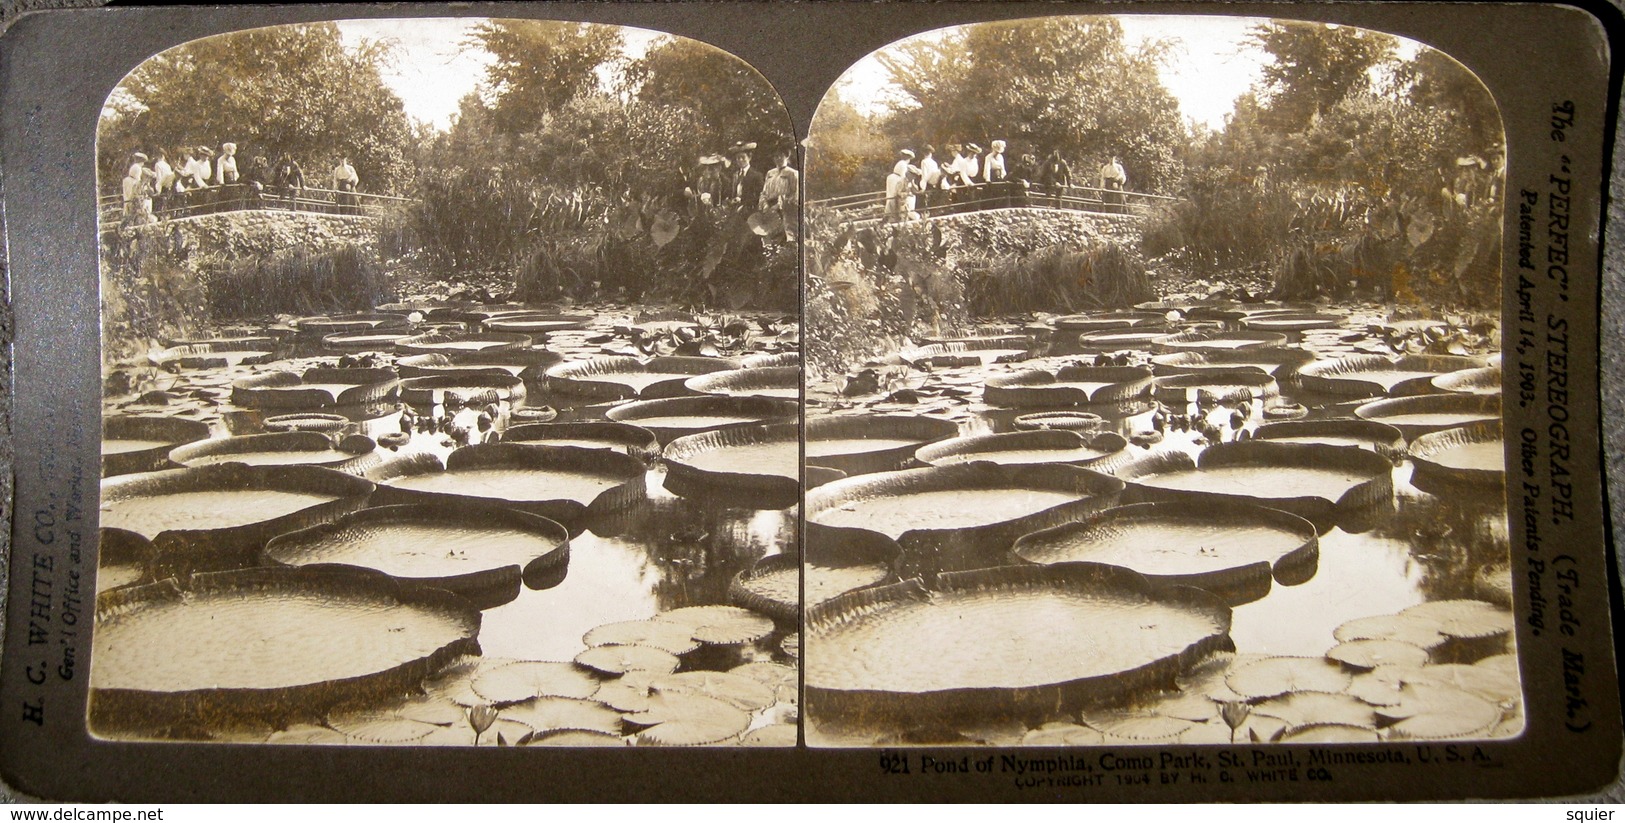 Pond Of Nymphia, Como Park, Minnesota, H.C.White - Stereoscopi